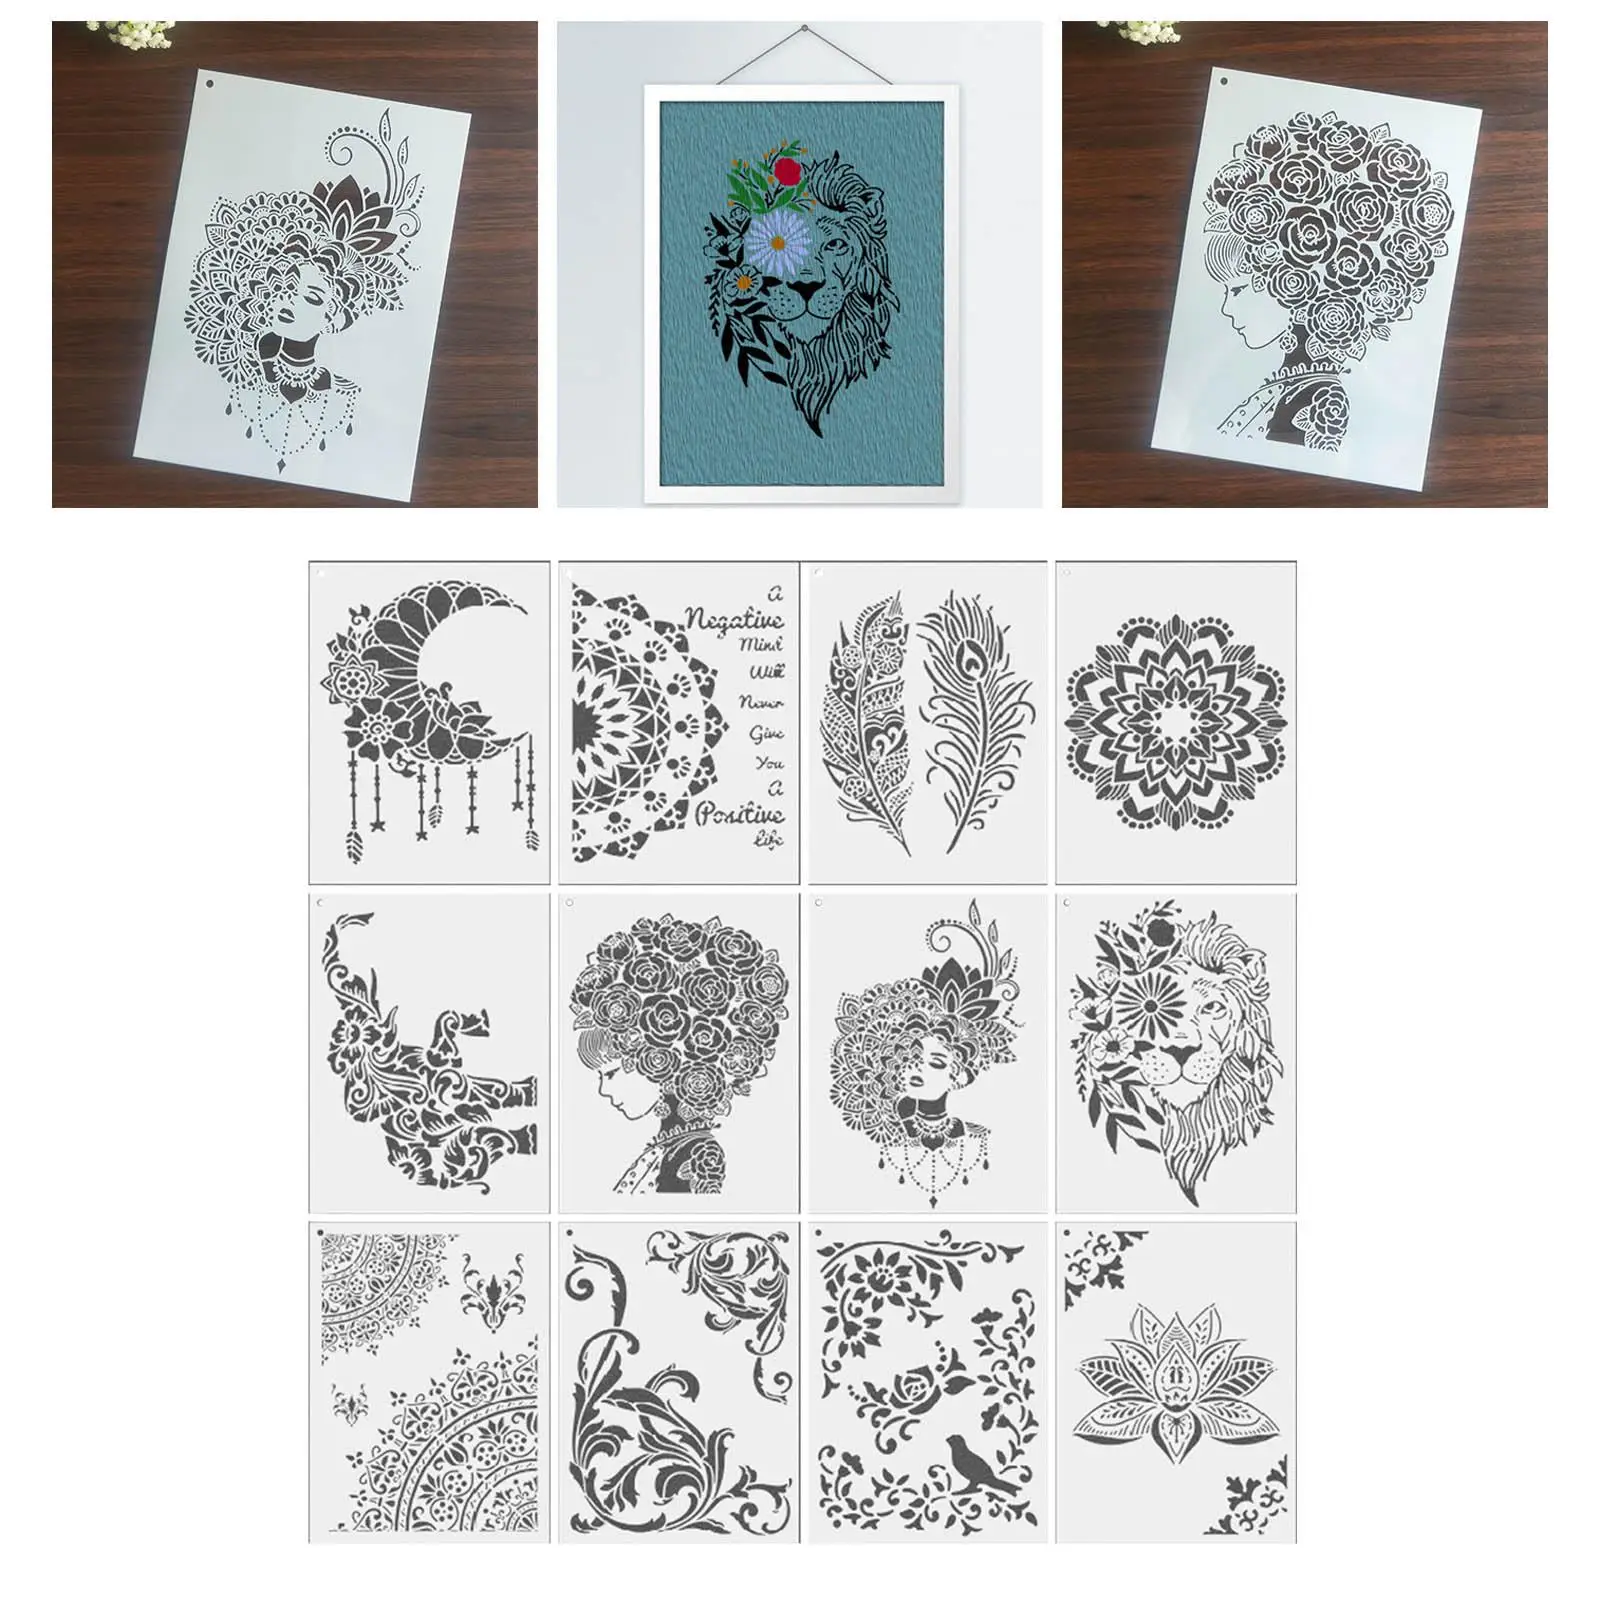 12pcs DIY Craft Mandala Stencils for Painting on Wood,Fabric,Walls Art Scrapbooking Stamping Album Embossing Paper Cards